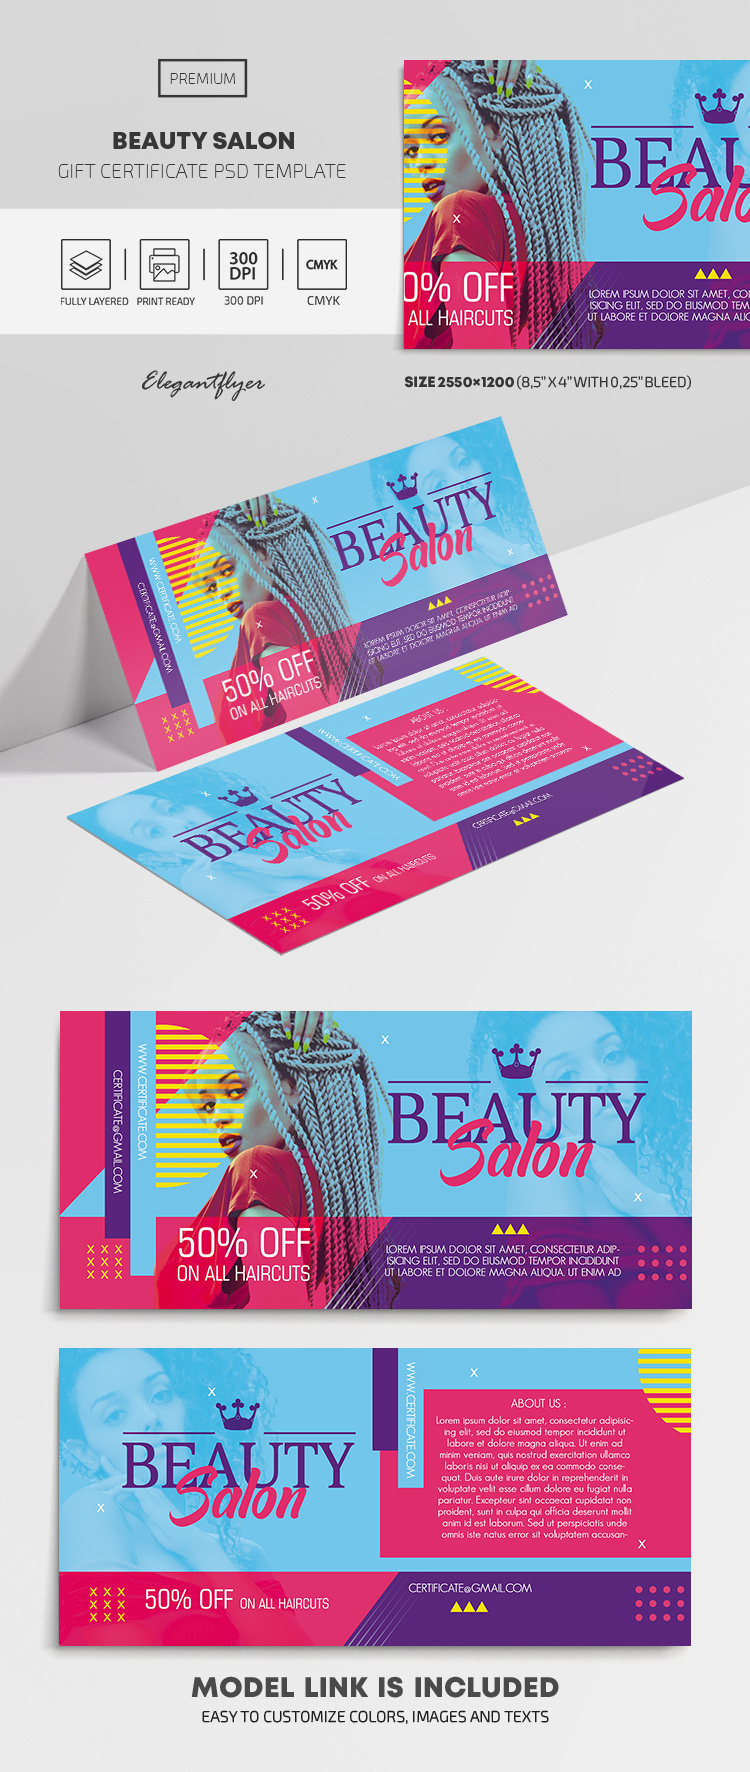 Beauty Salon Premium Gift Certificate Template In Psd For Salon Gift Certificate Template